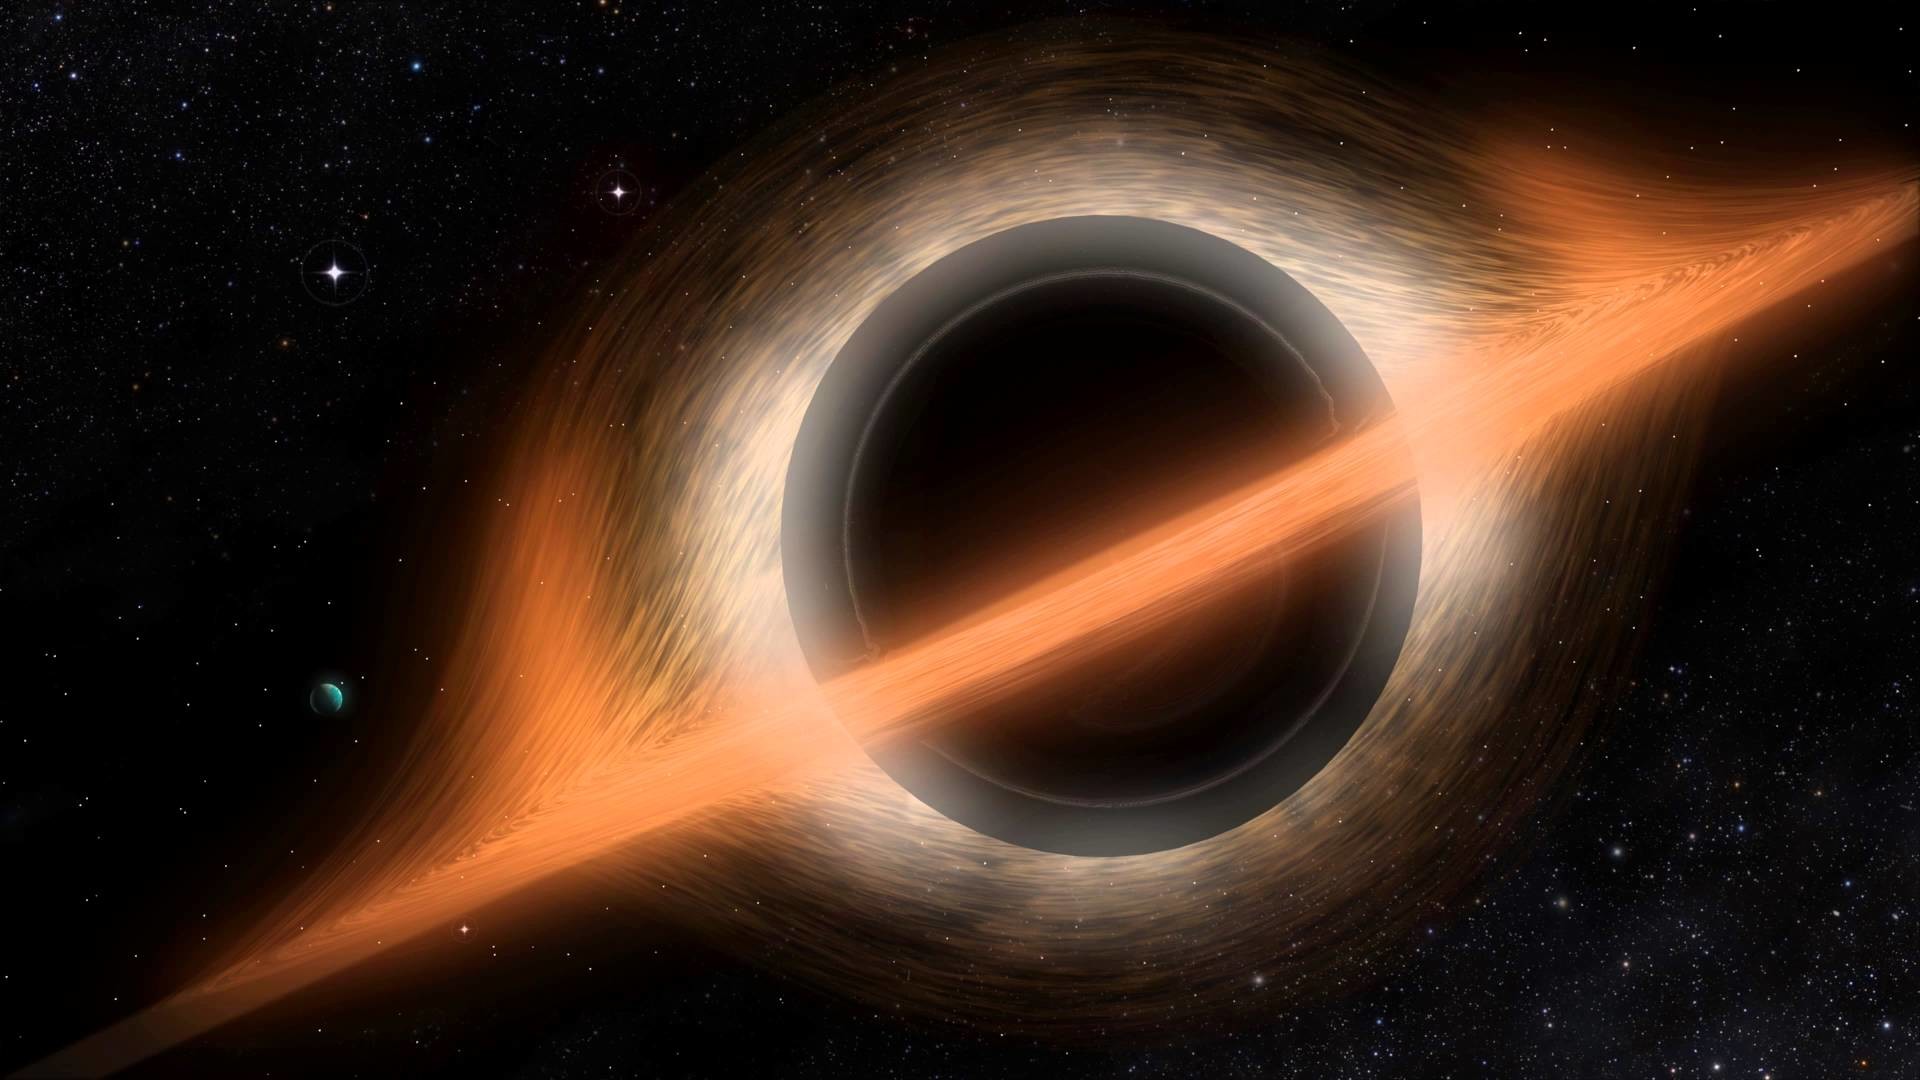 1920x1080 Interstellar Style Black Hole Visualization (4K Ultra High Defini...